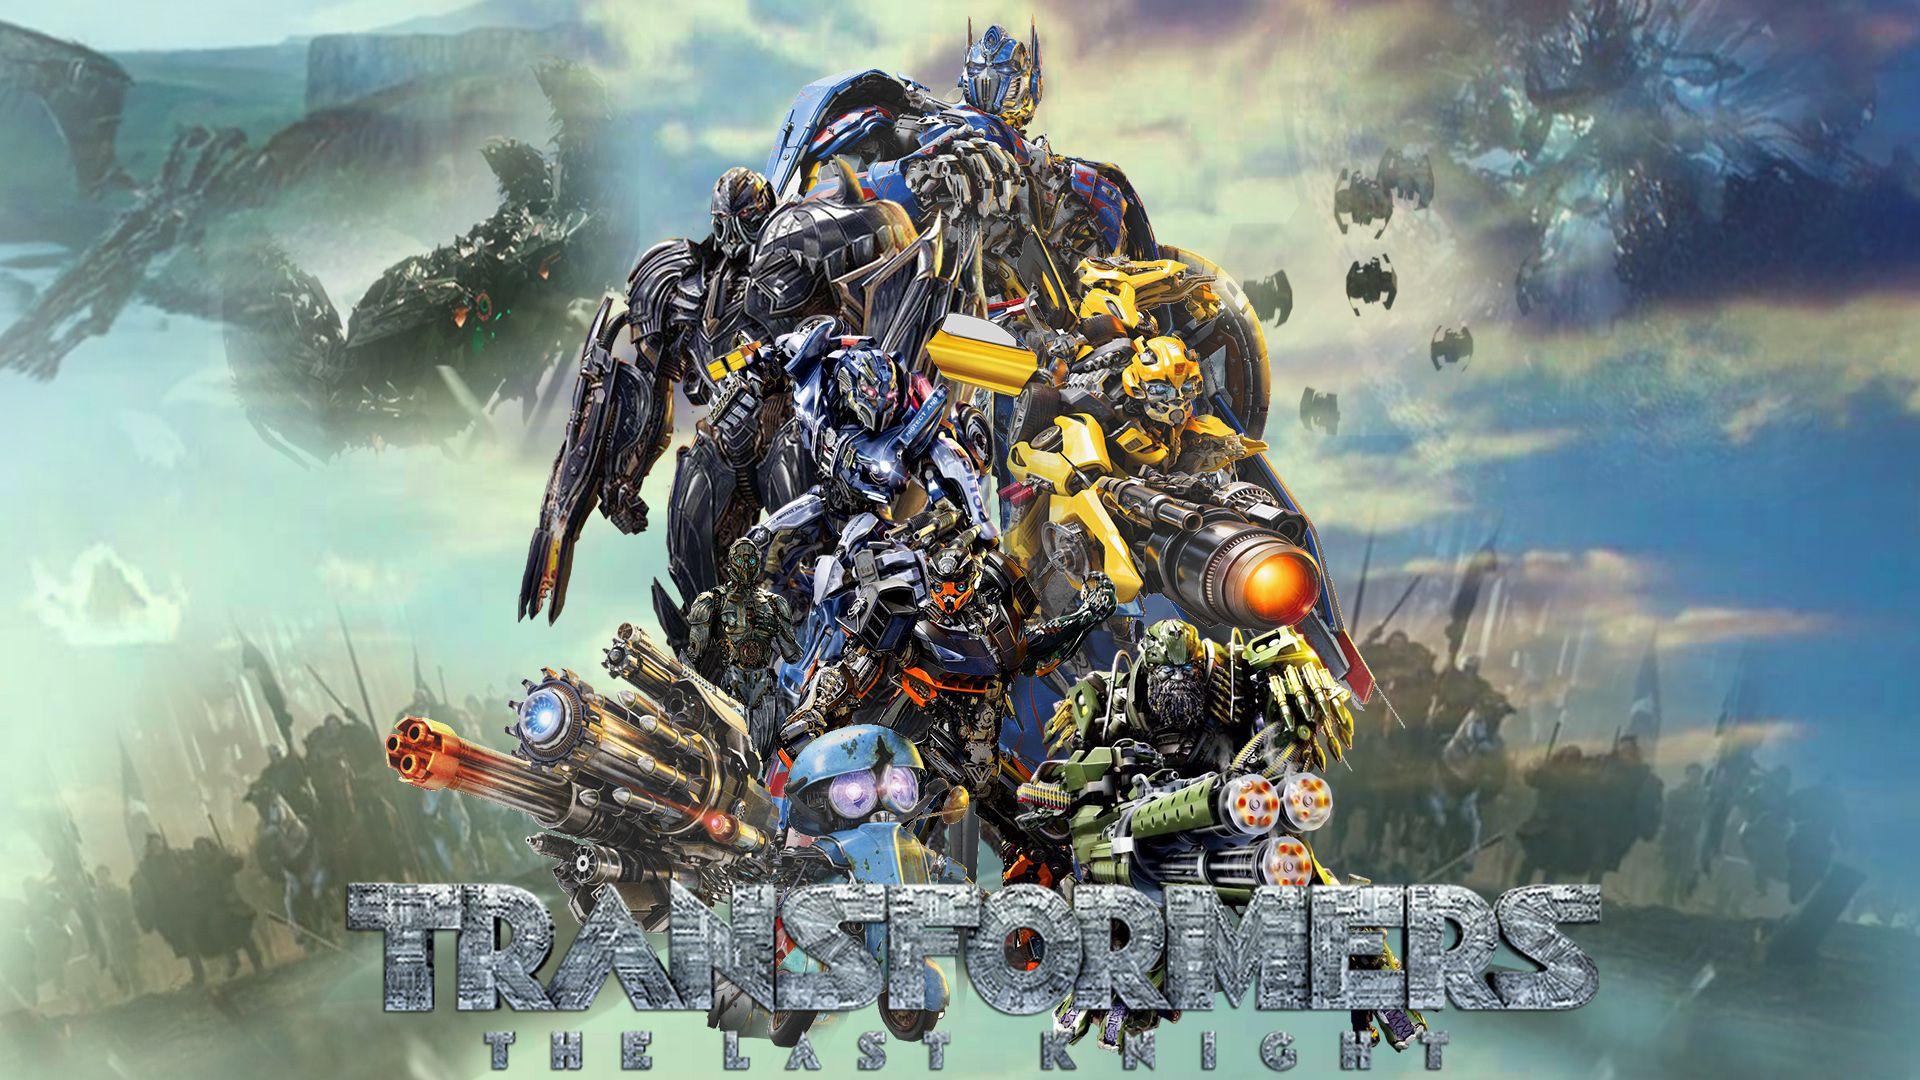 Transformers: The Last Knight Wallpaper By The Dark Mamba 995